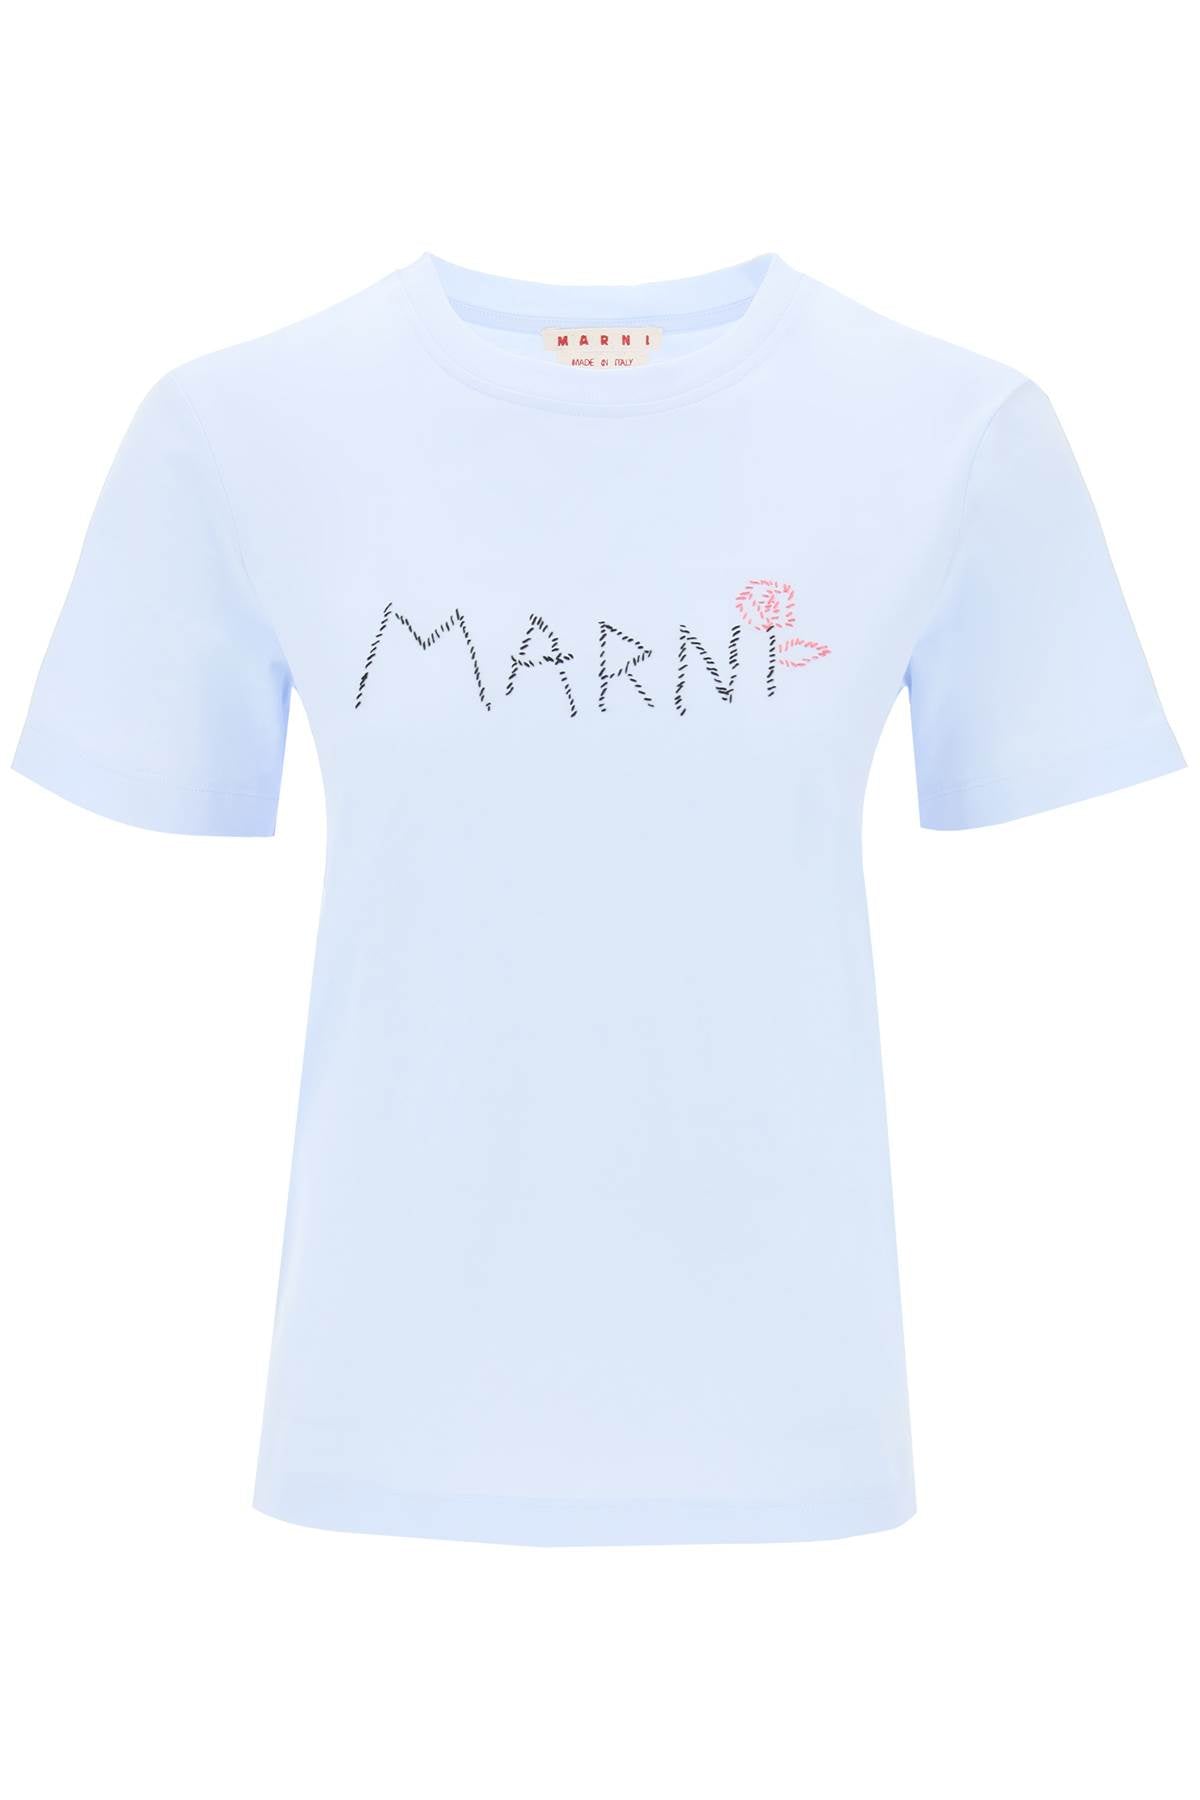 Marni hand-embroidered logo t-shirt THJE0293S0UTC017 LIGHT BLUE